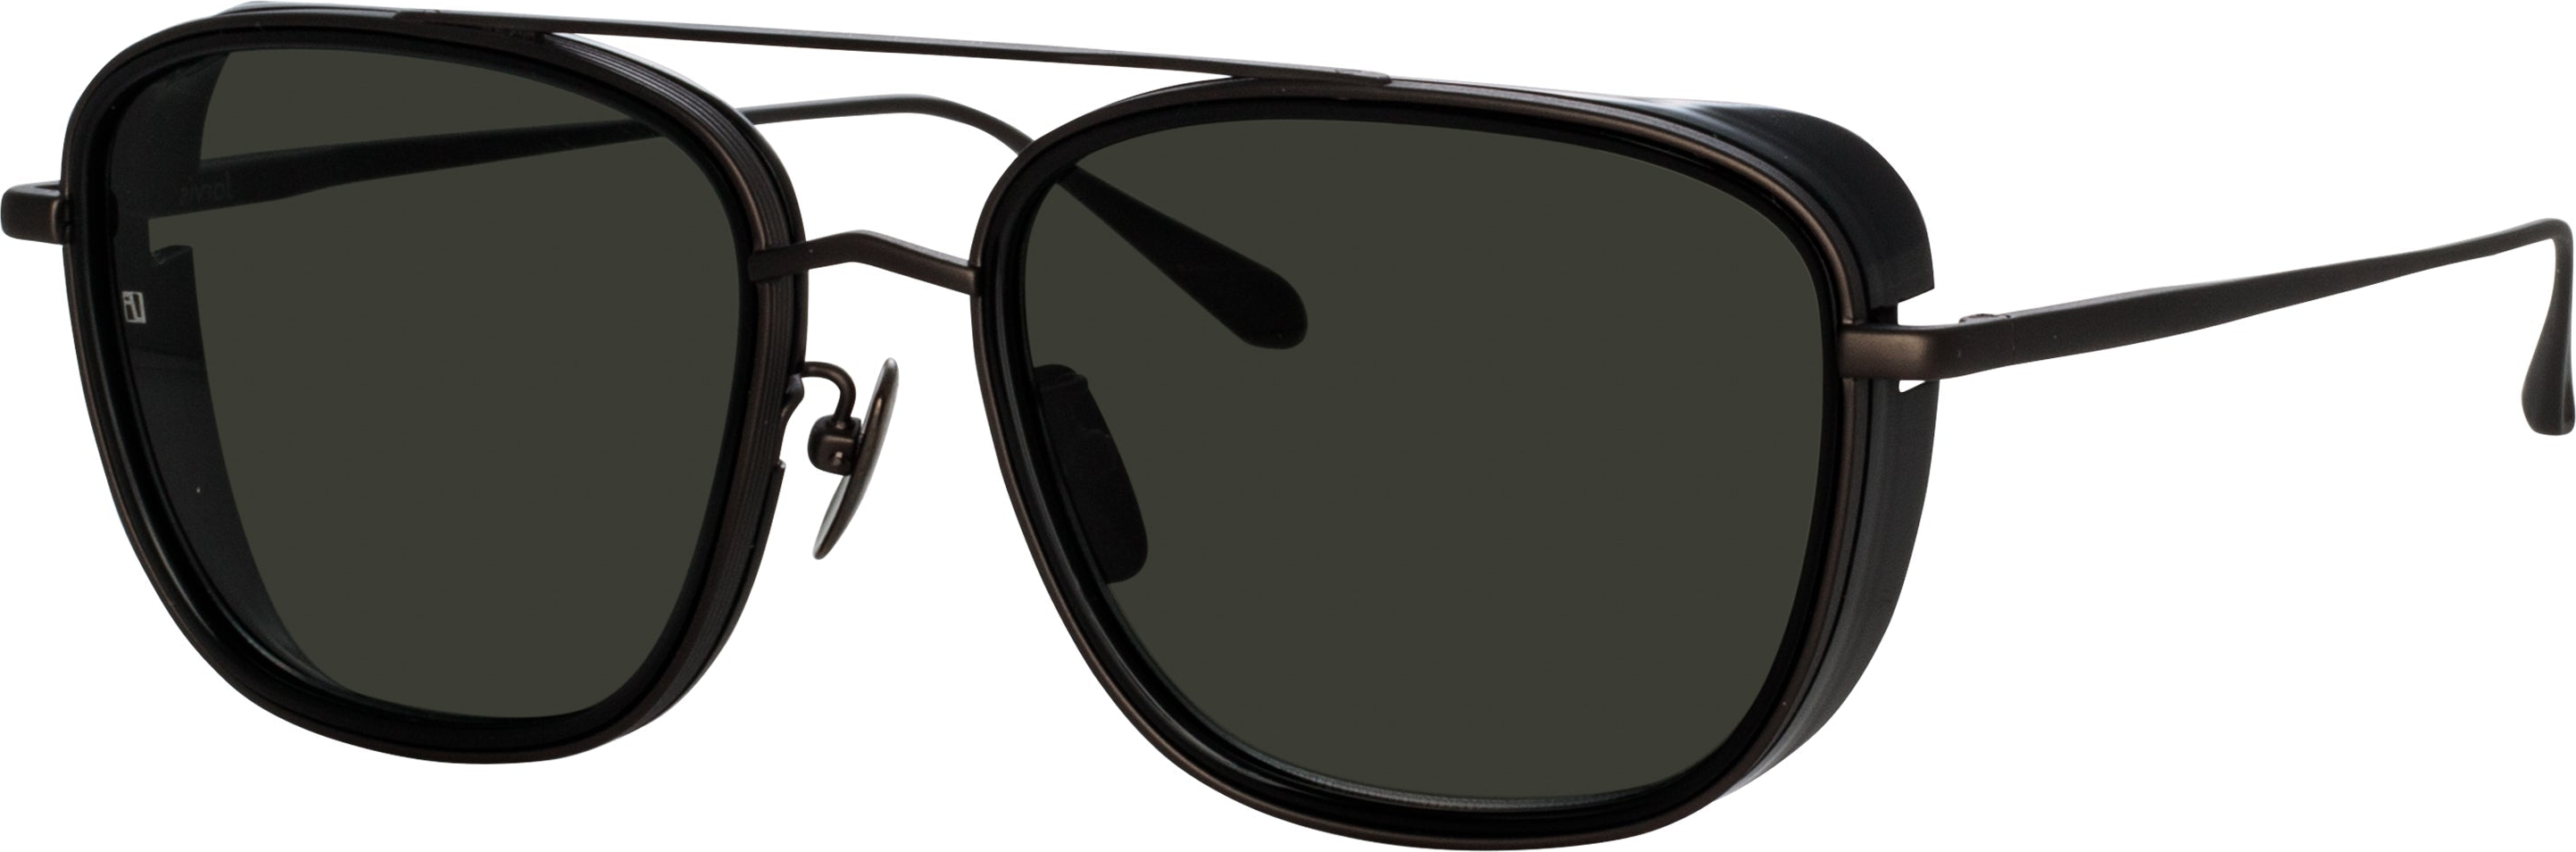 Color_LFL1441C2SUN - Jarvis Aviator Sunglasses in Black and Nickel